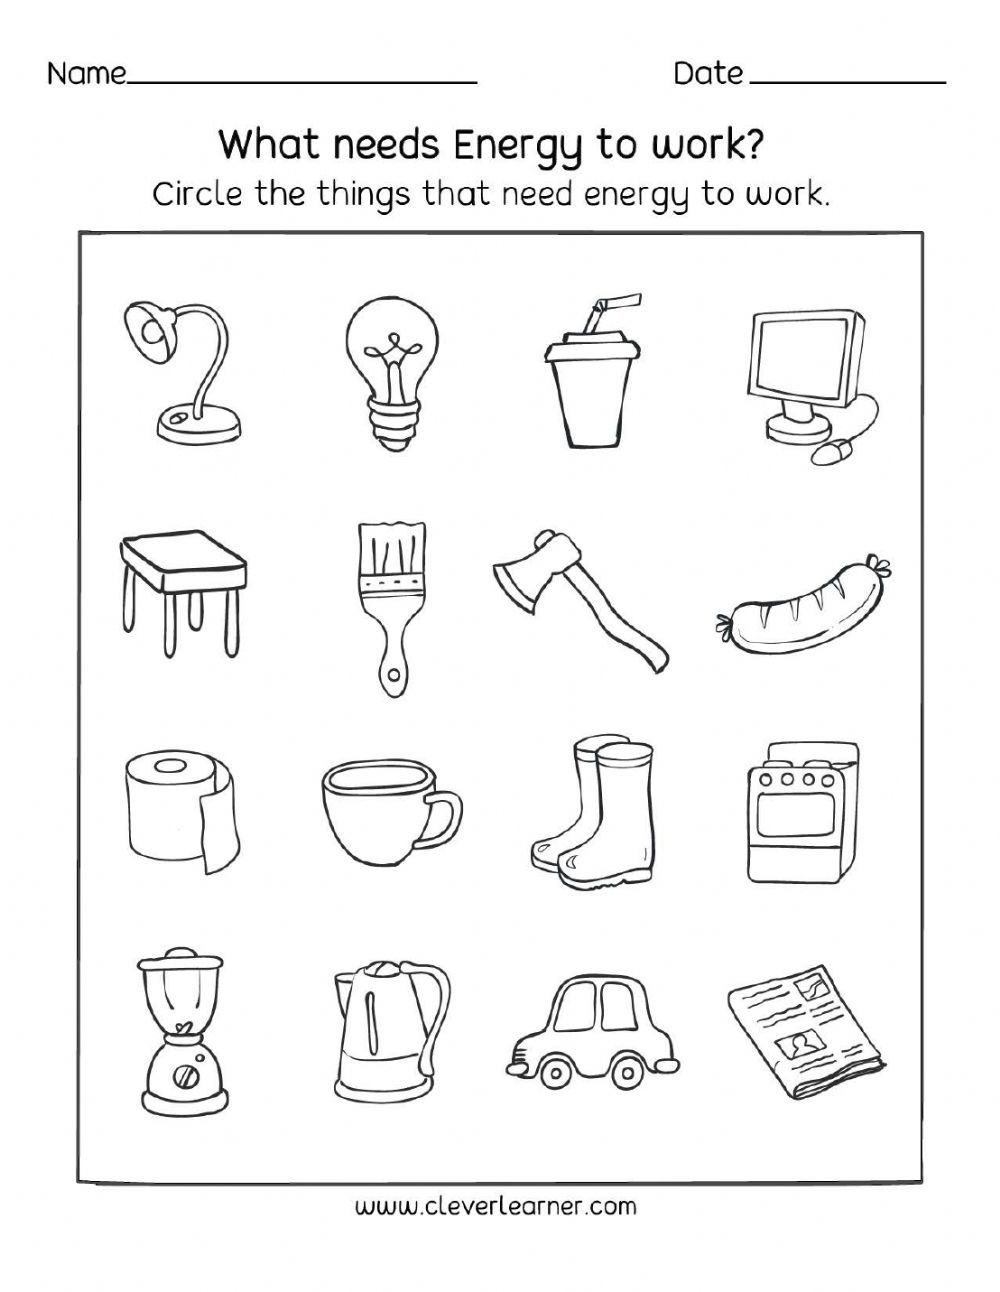 Work and Energy Worksheet Energy and Work Interactive Worksheet